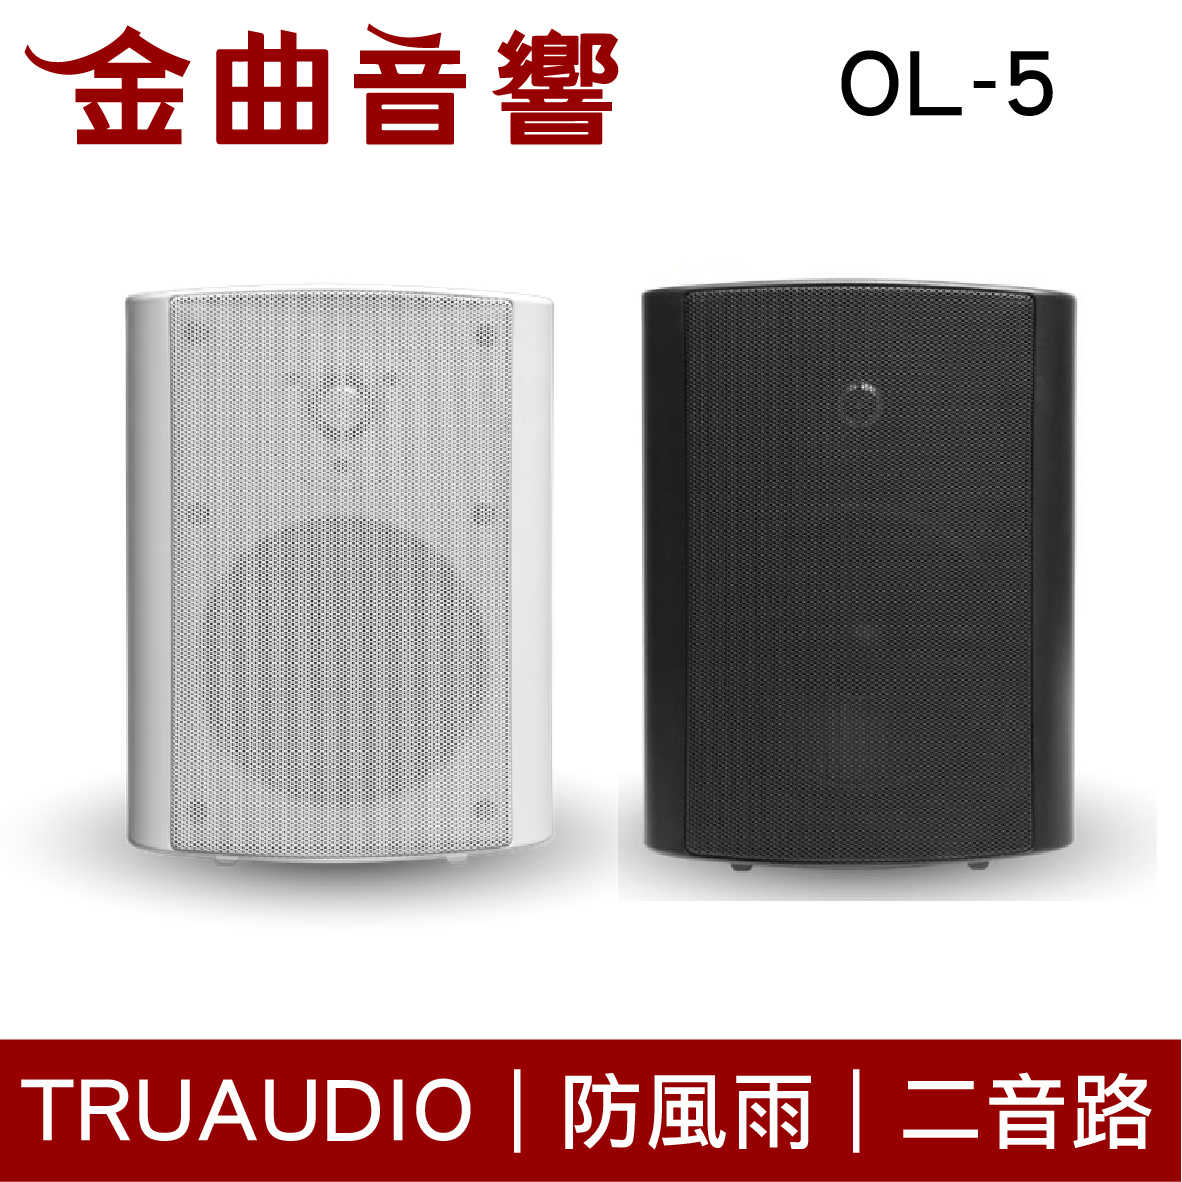 Truaudio OL-5 戶外 防風雨 揚聲器 | 金曲音響